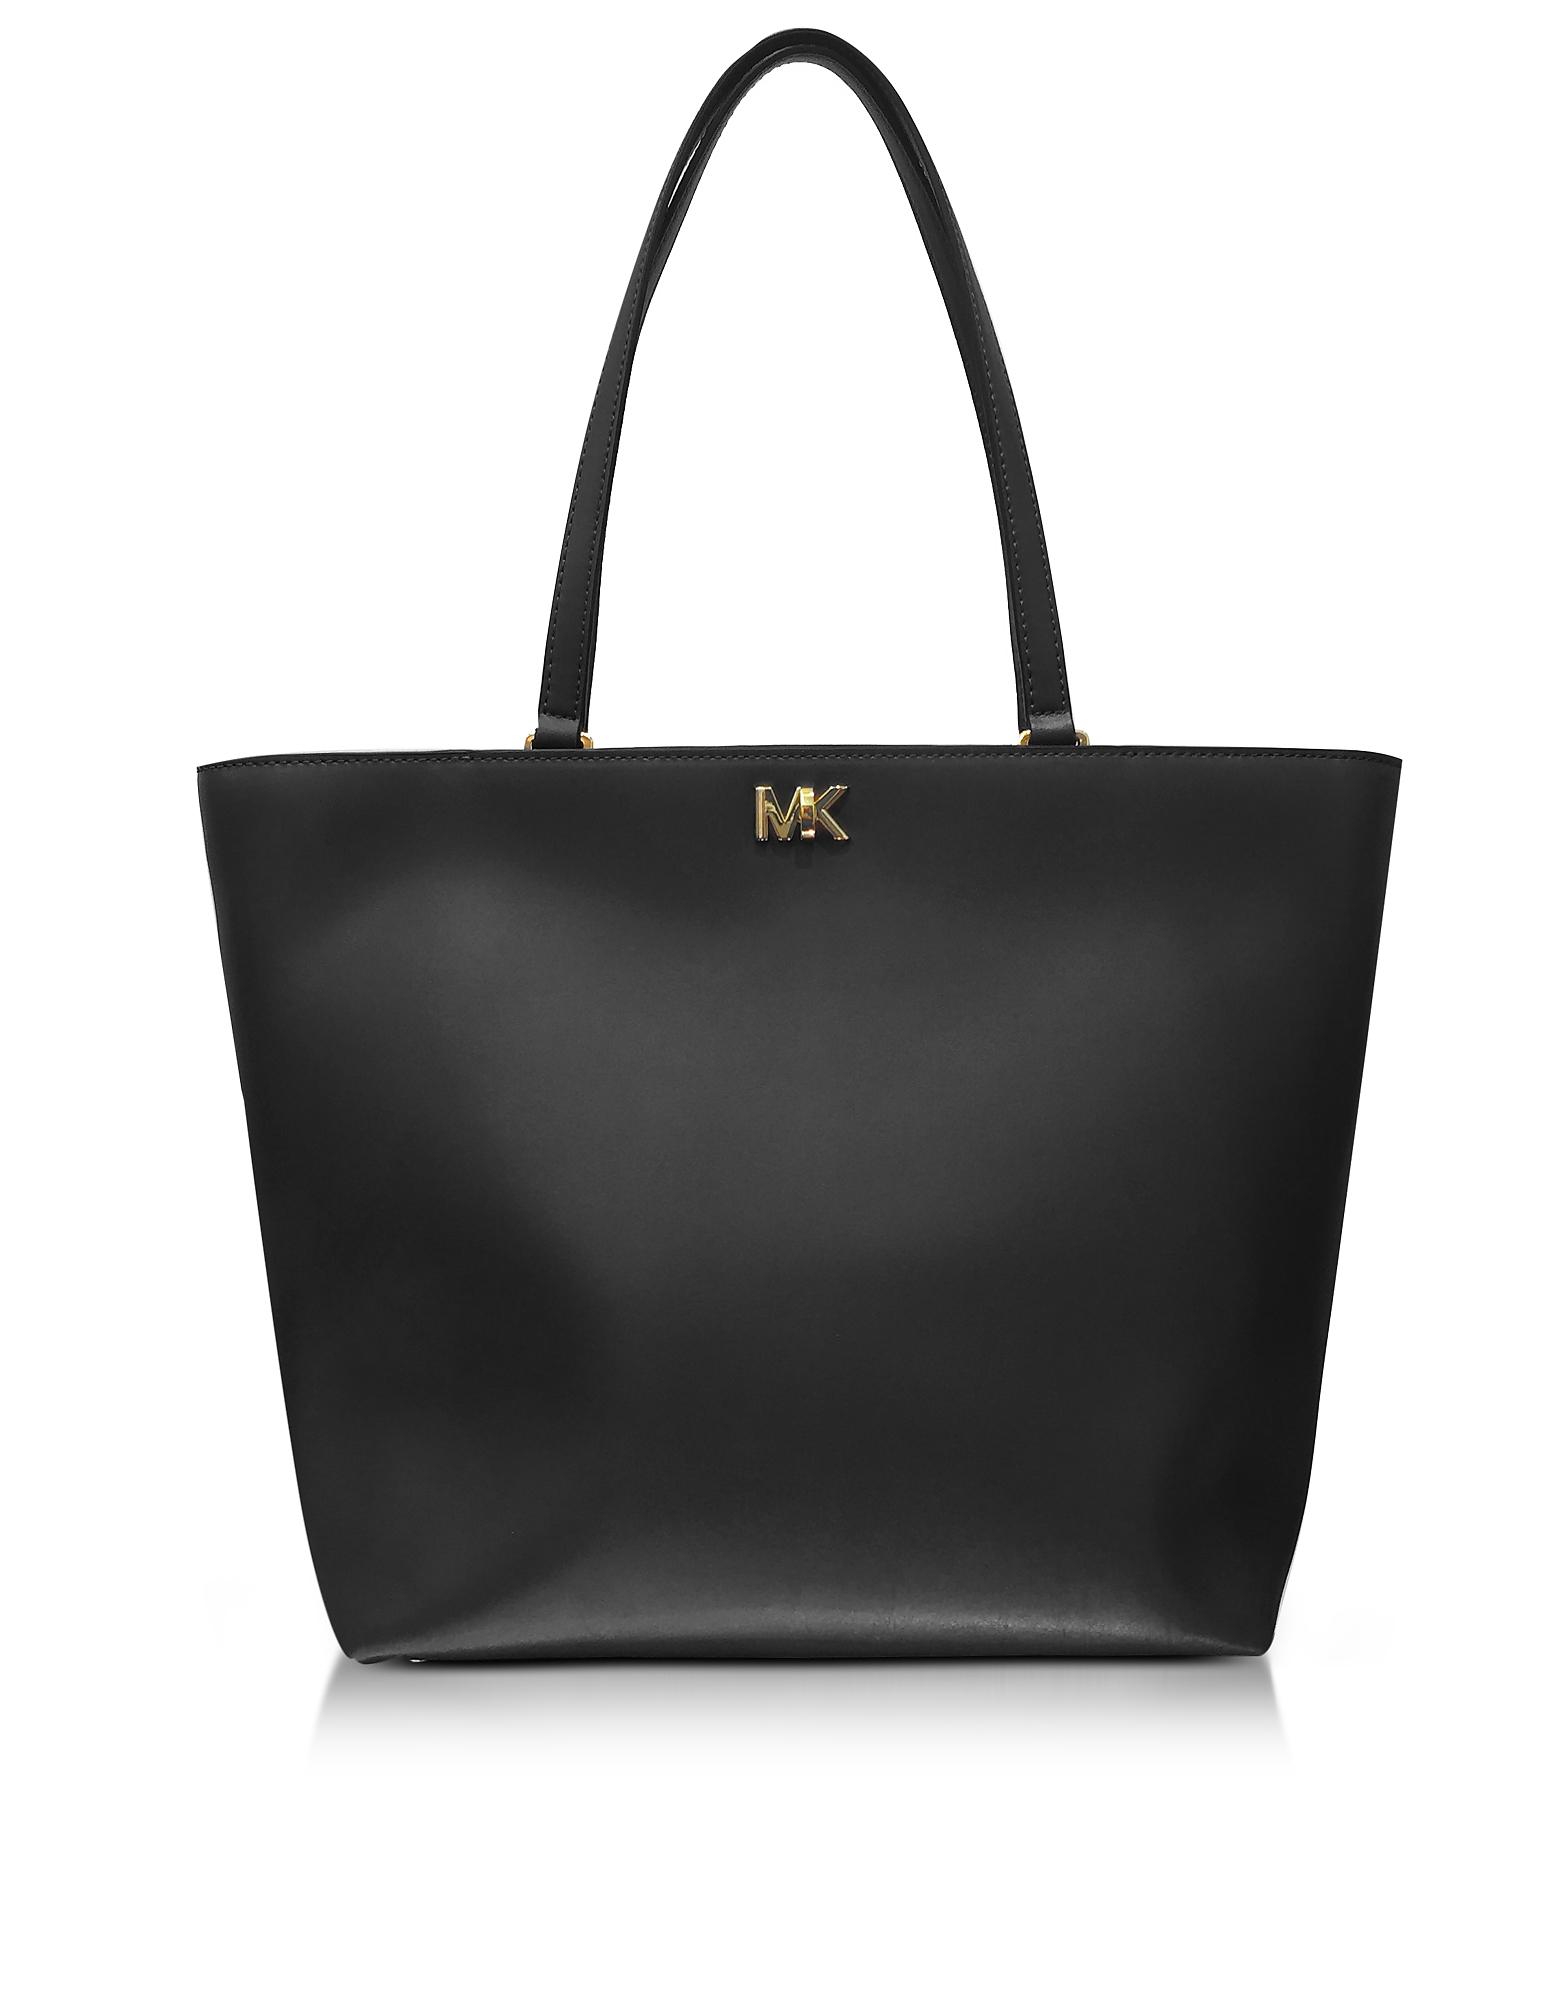 Lyst - Michael Kors Mott Medium Black Leather Tote Bag in Black